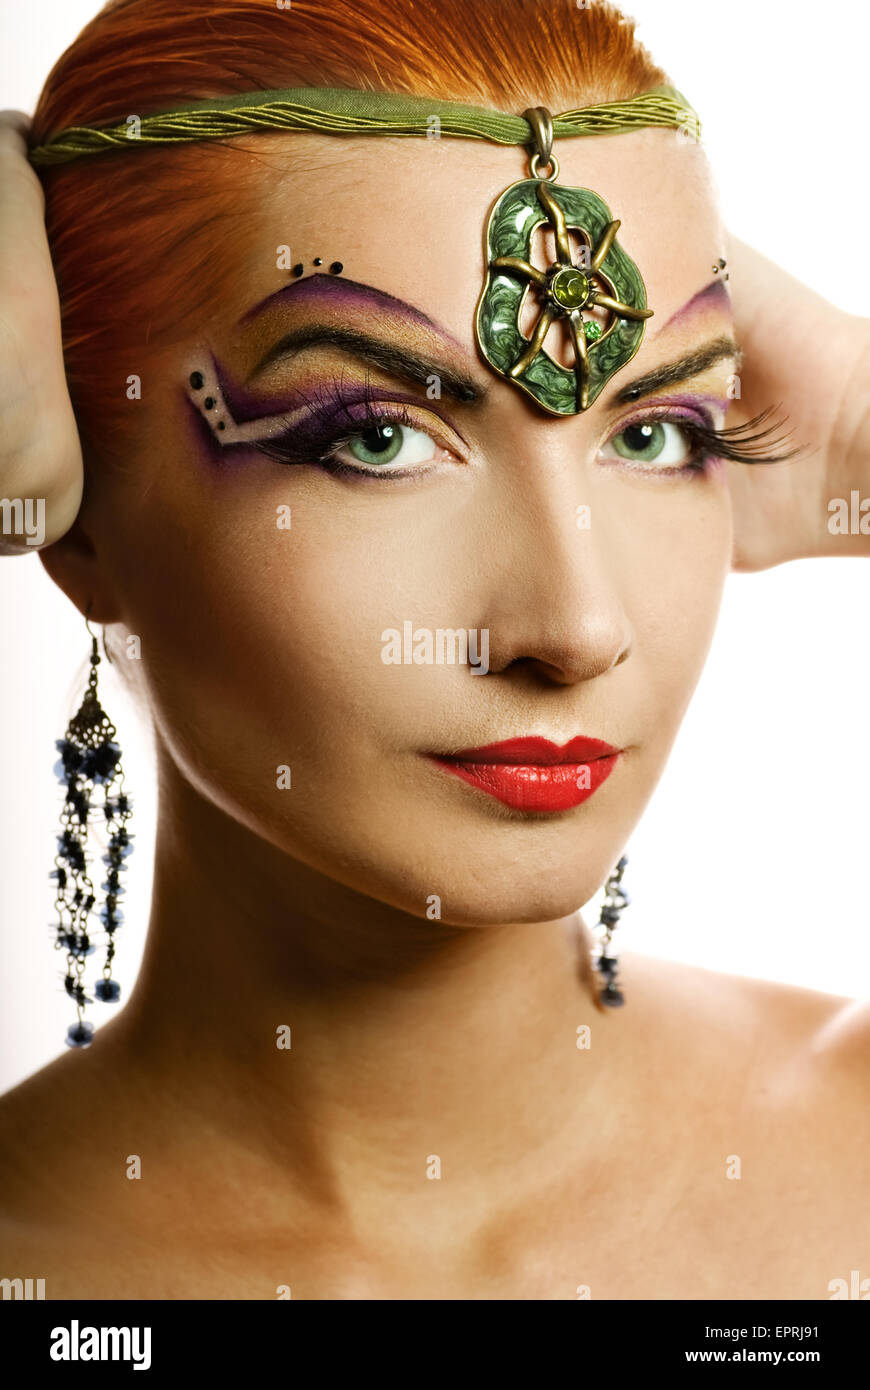 Beautiful irish girl with creative make-up Stock Photo